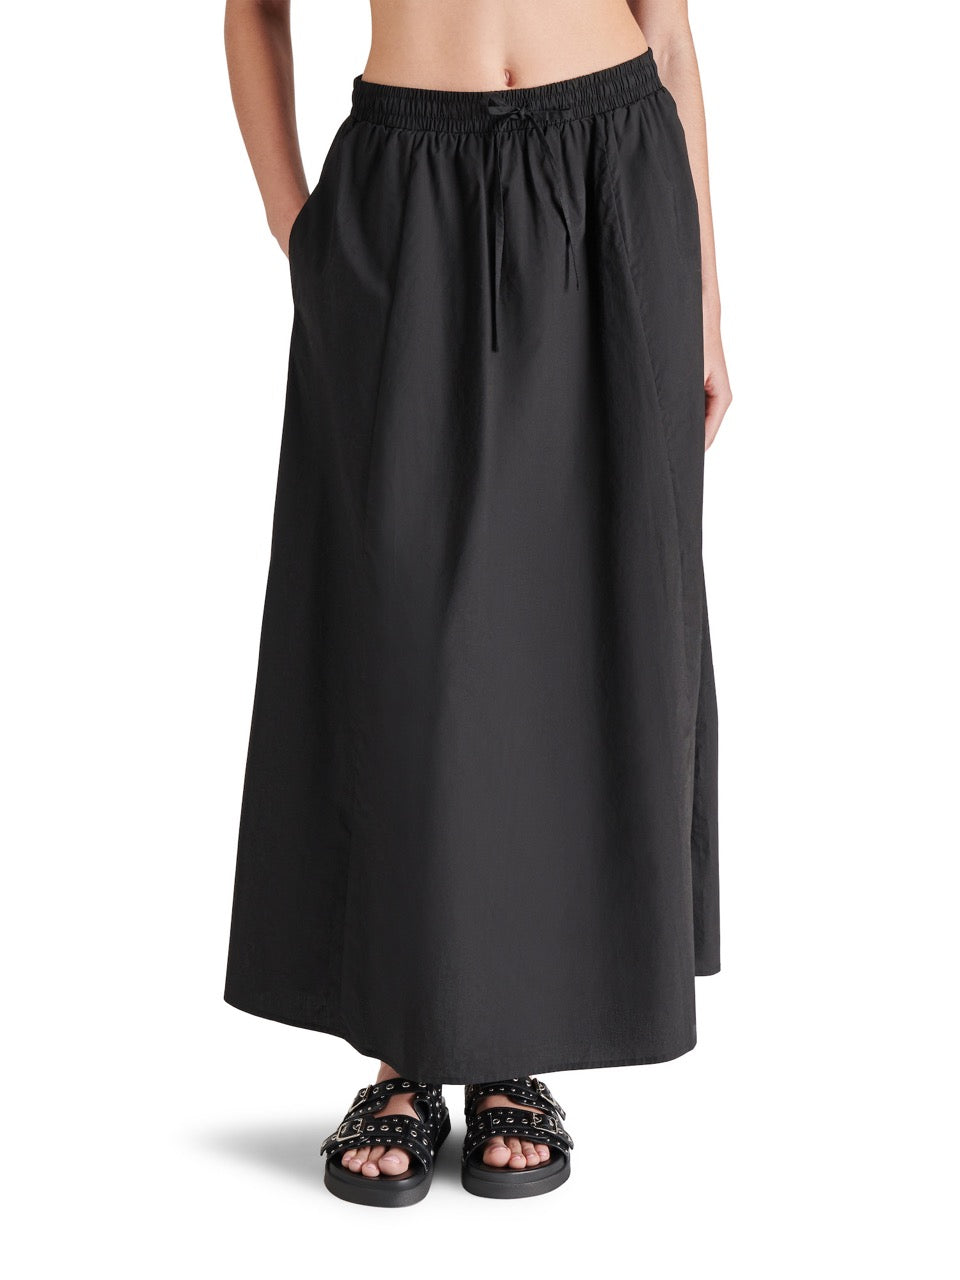 steve madden sunny maxi skirt in black-front view